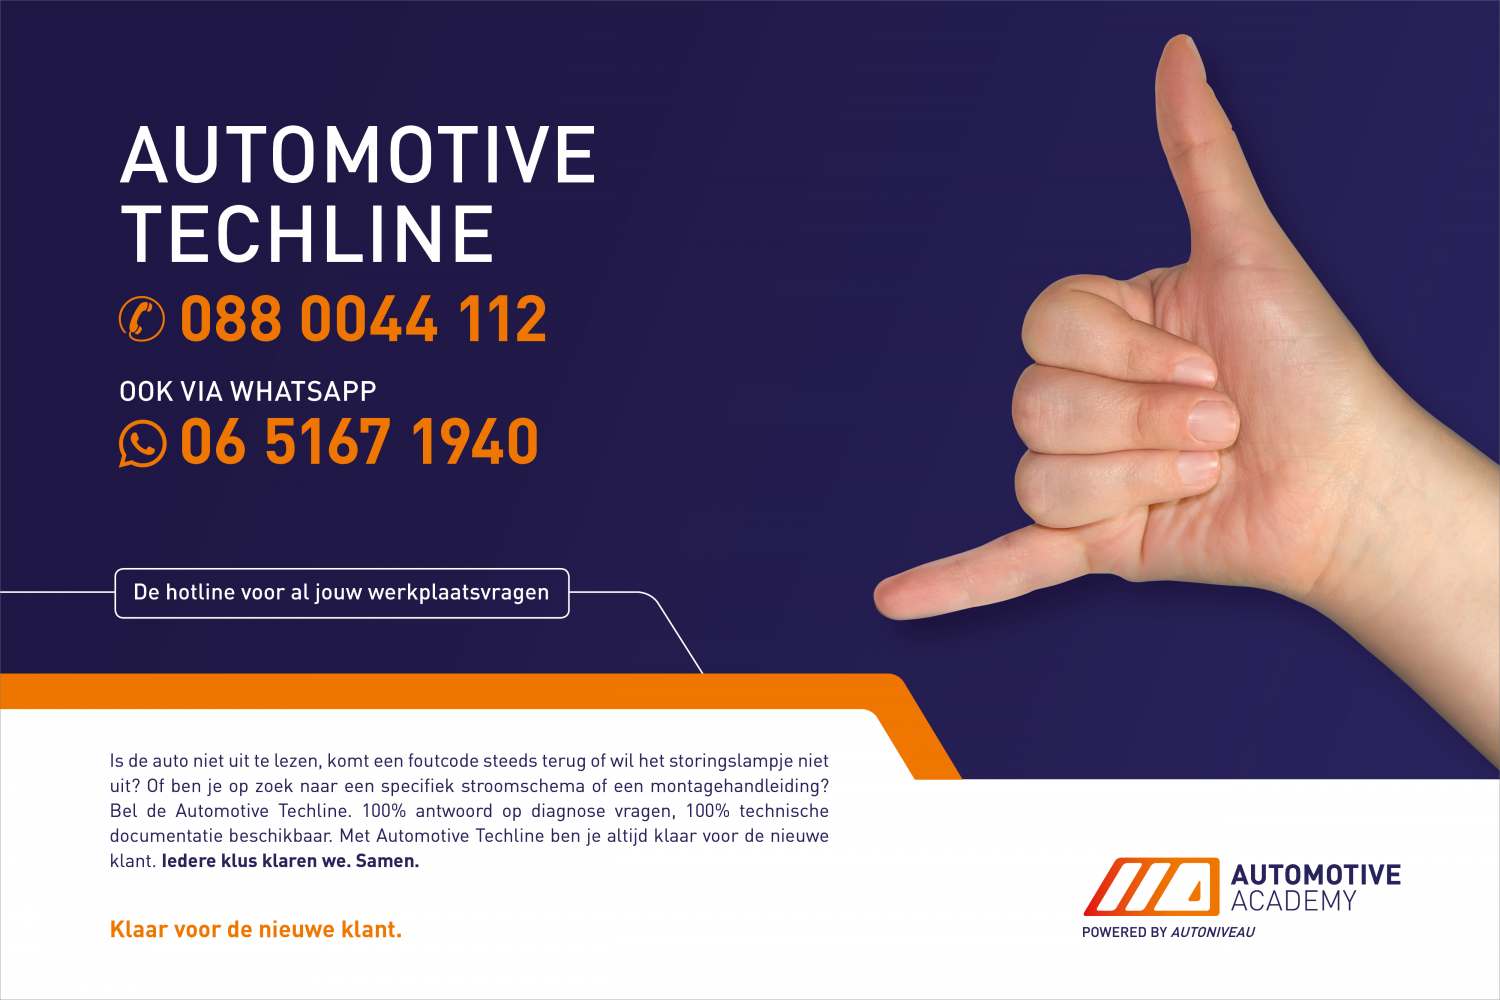 Automotive Academy advertentie_148